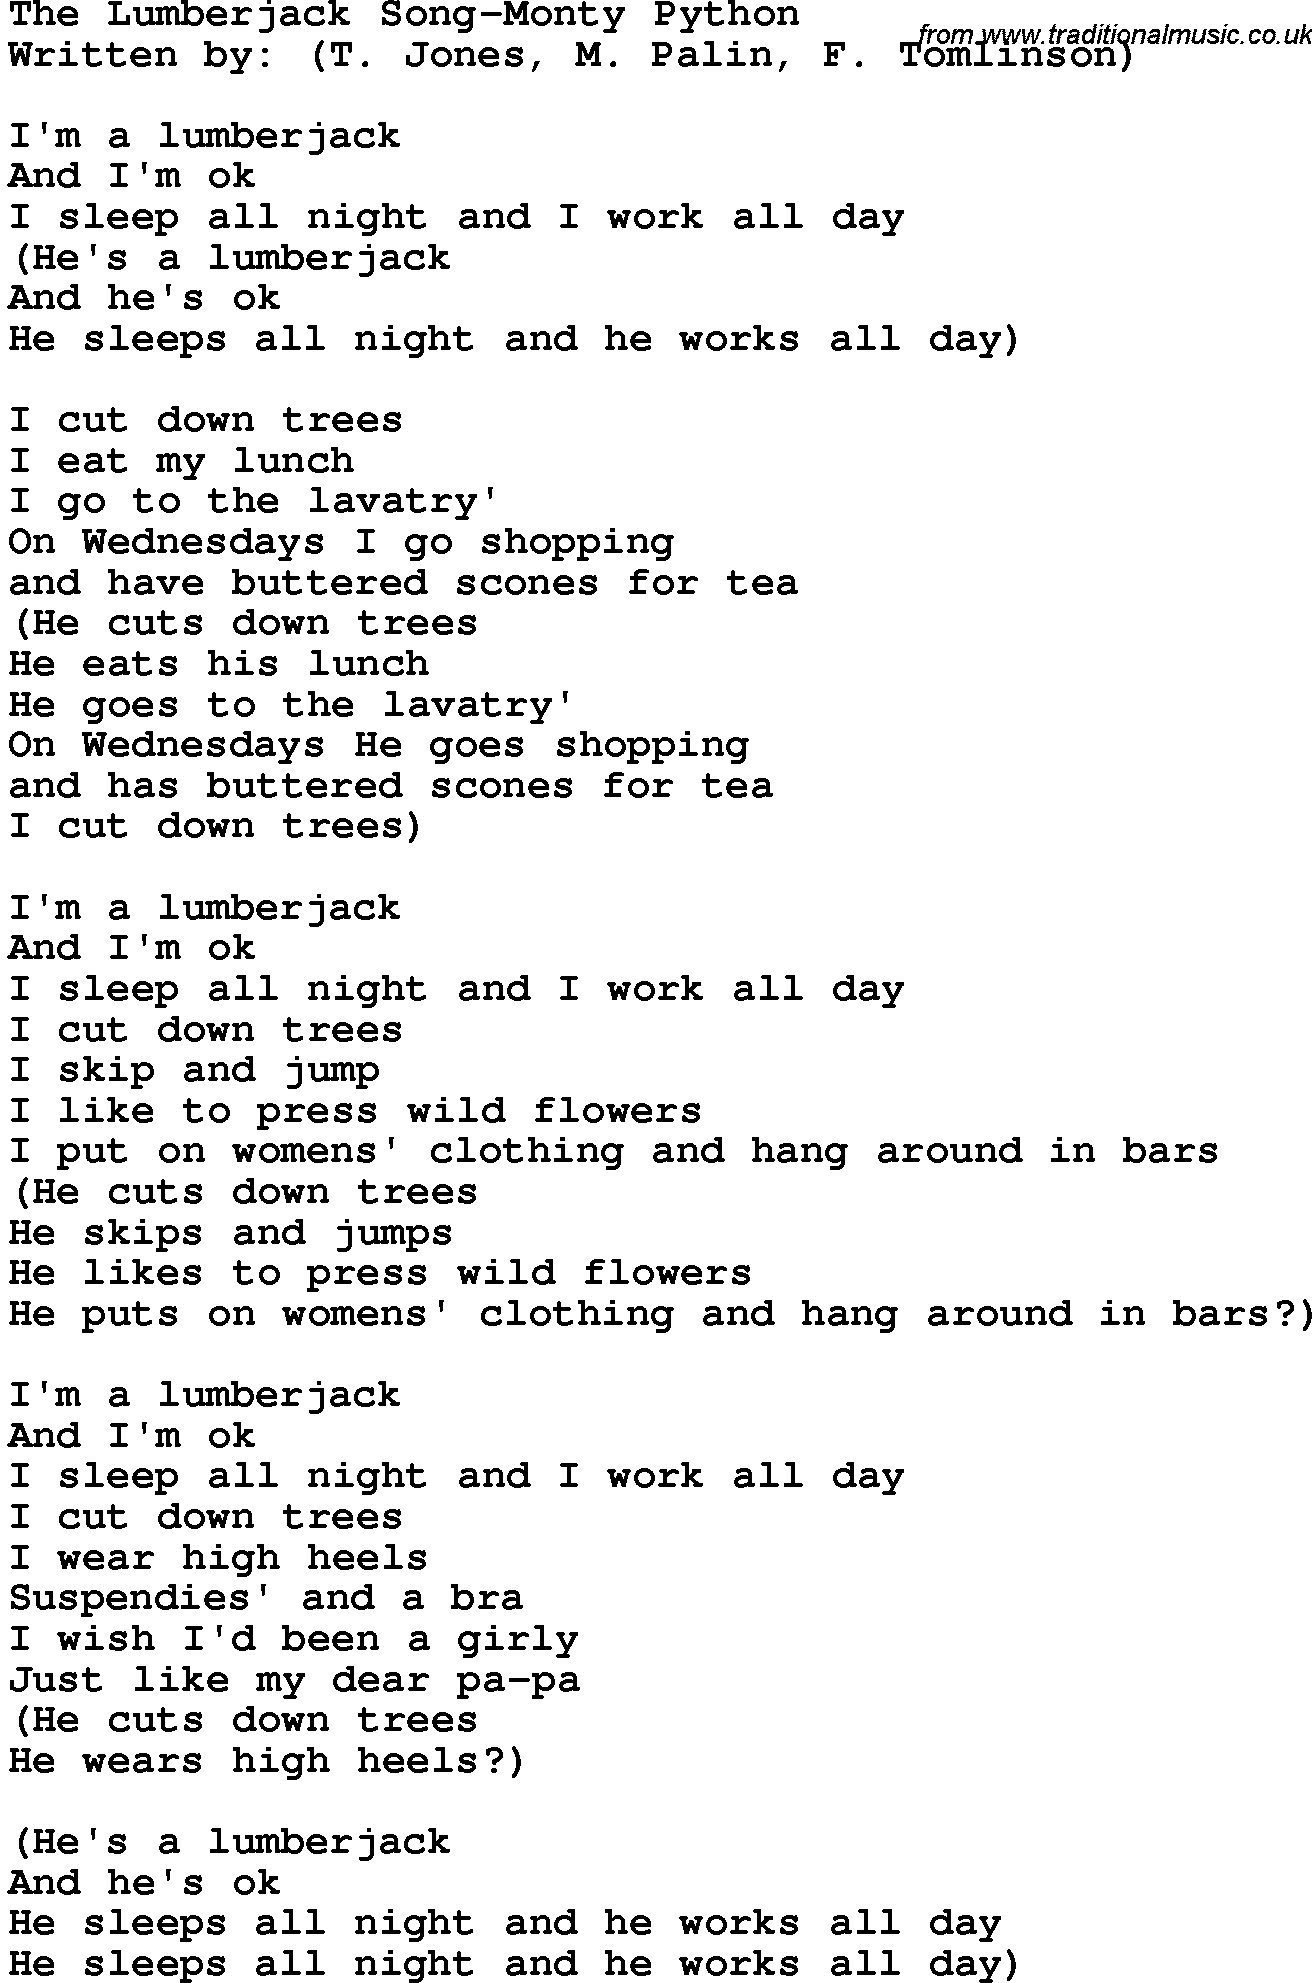 Novelty song: The Lumberjack Song-Monty Python lyrics